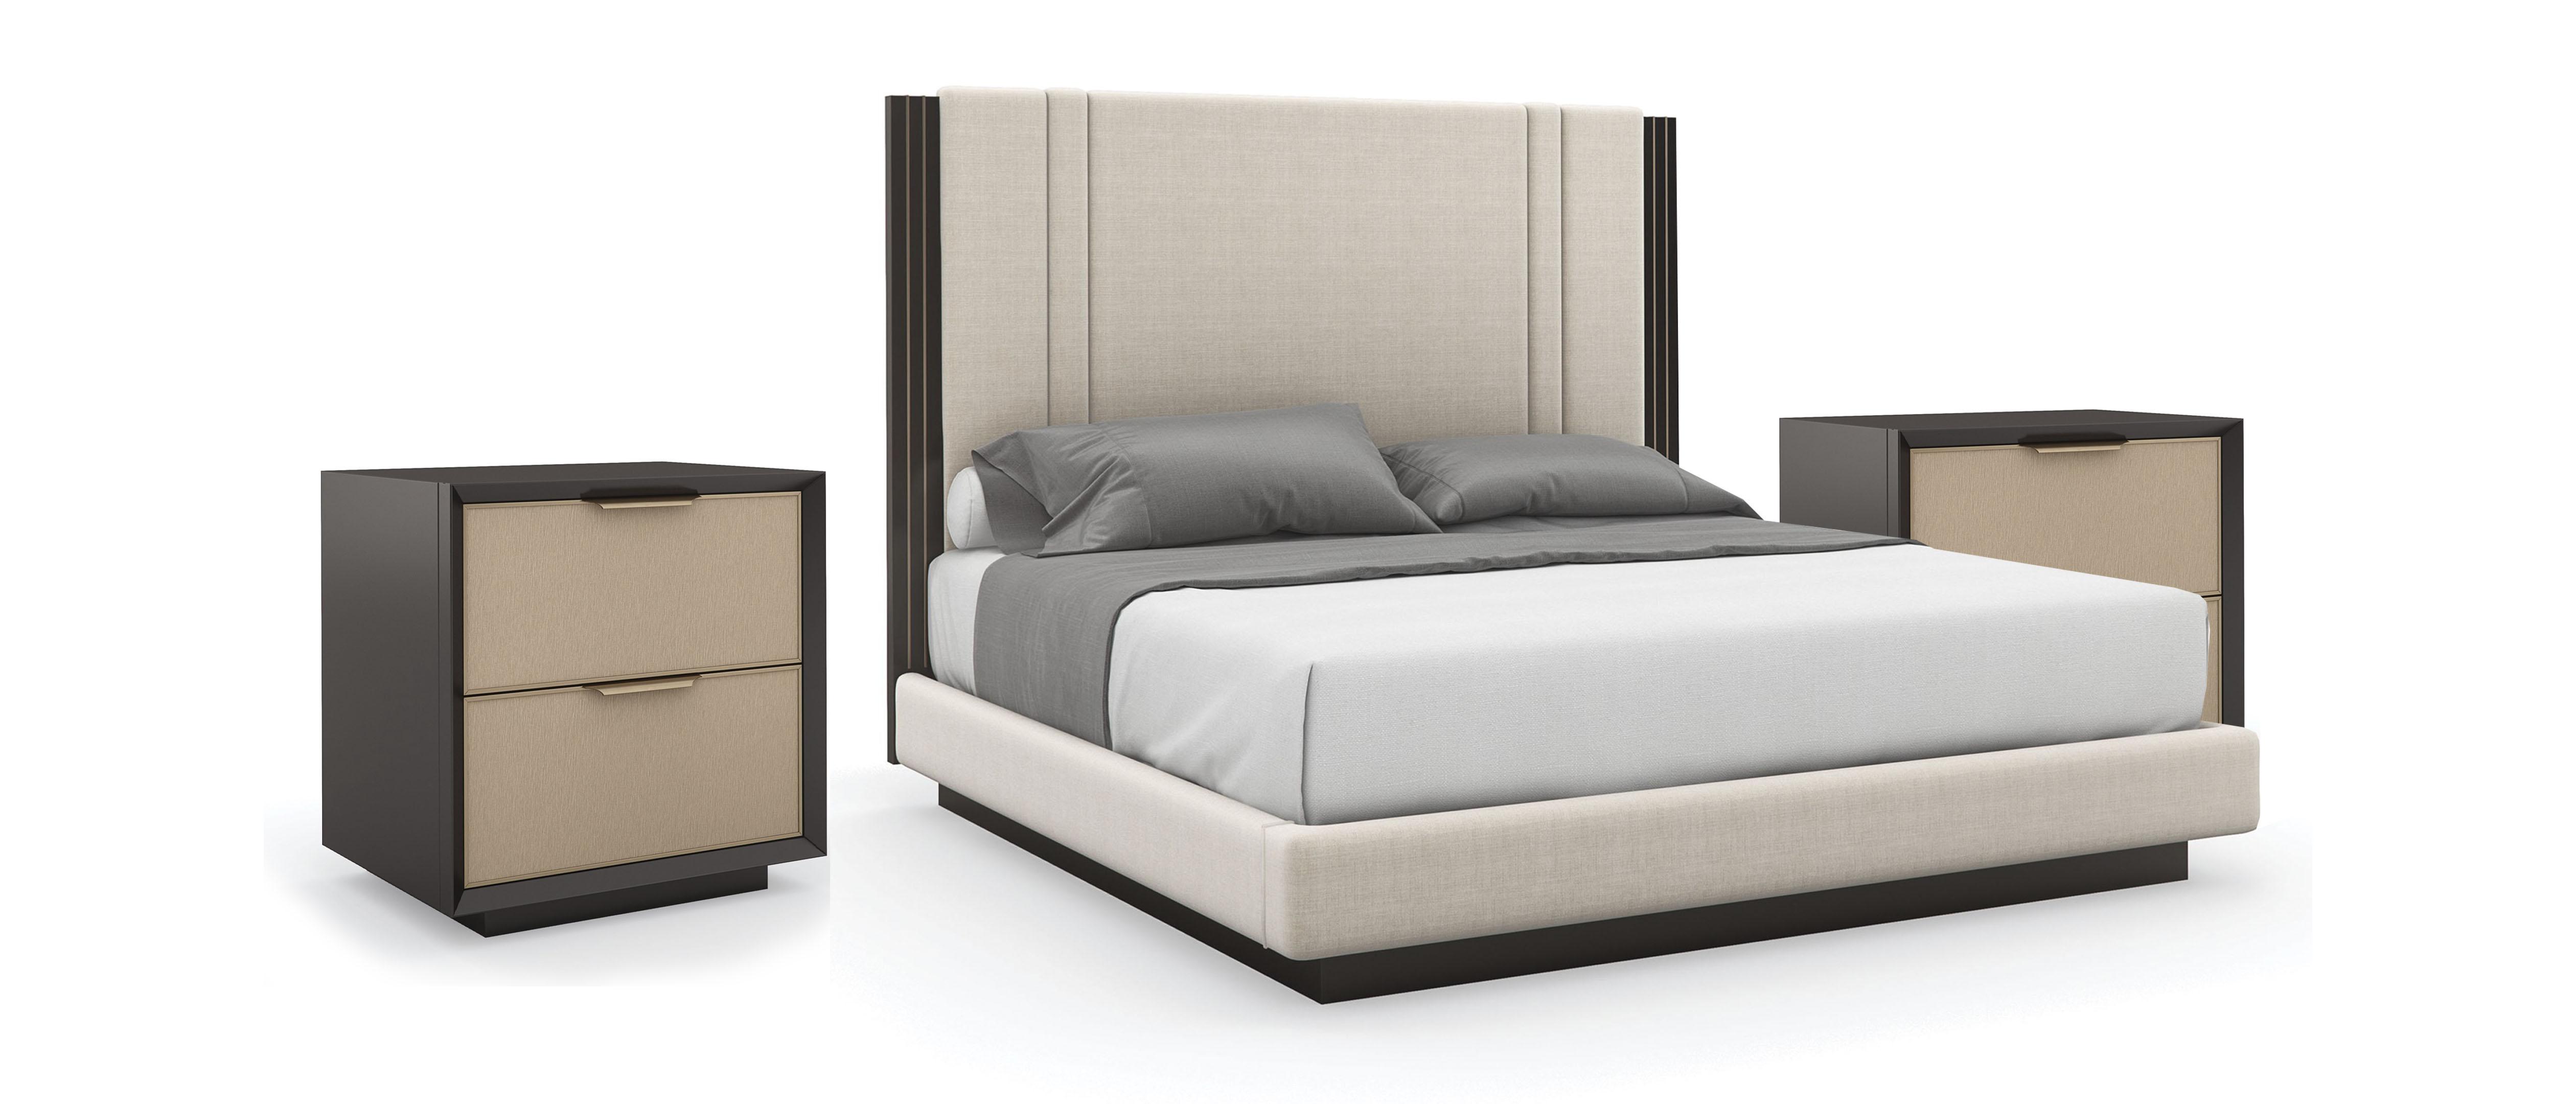 Contemporary Platform Bed Set DECENT PROPOSAL / DOUBLE WRAP CLA-020-125-Set-3 in Light Gray Fabric